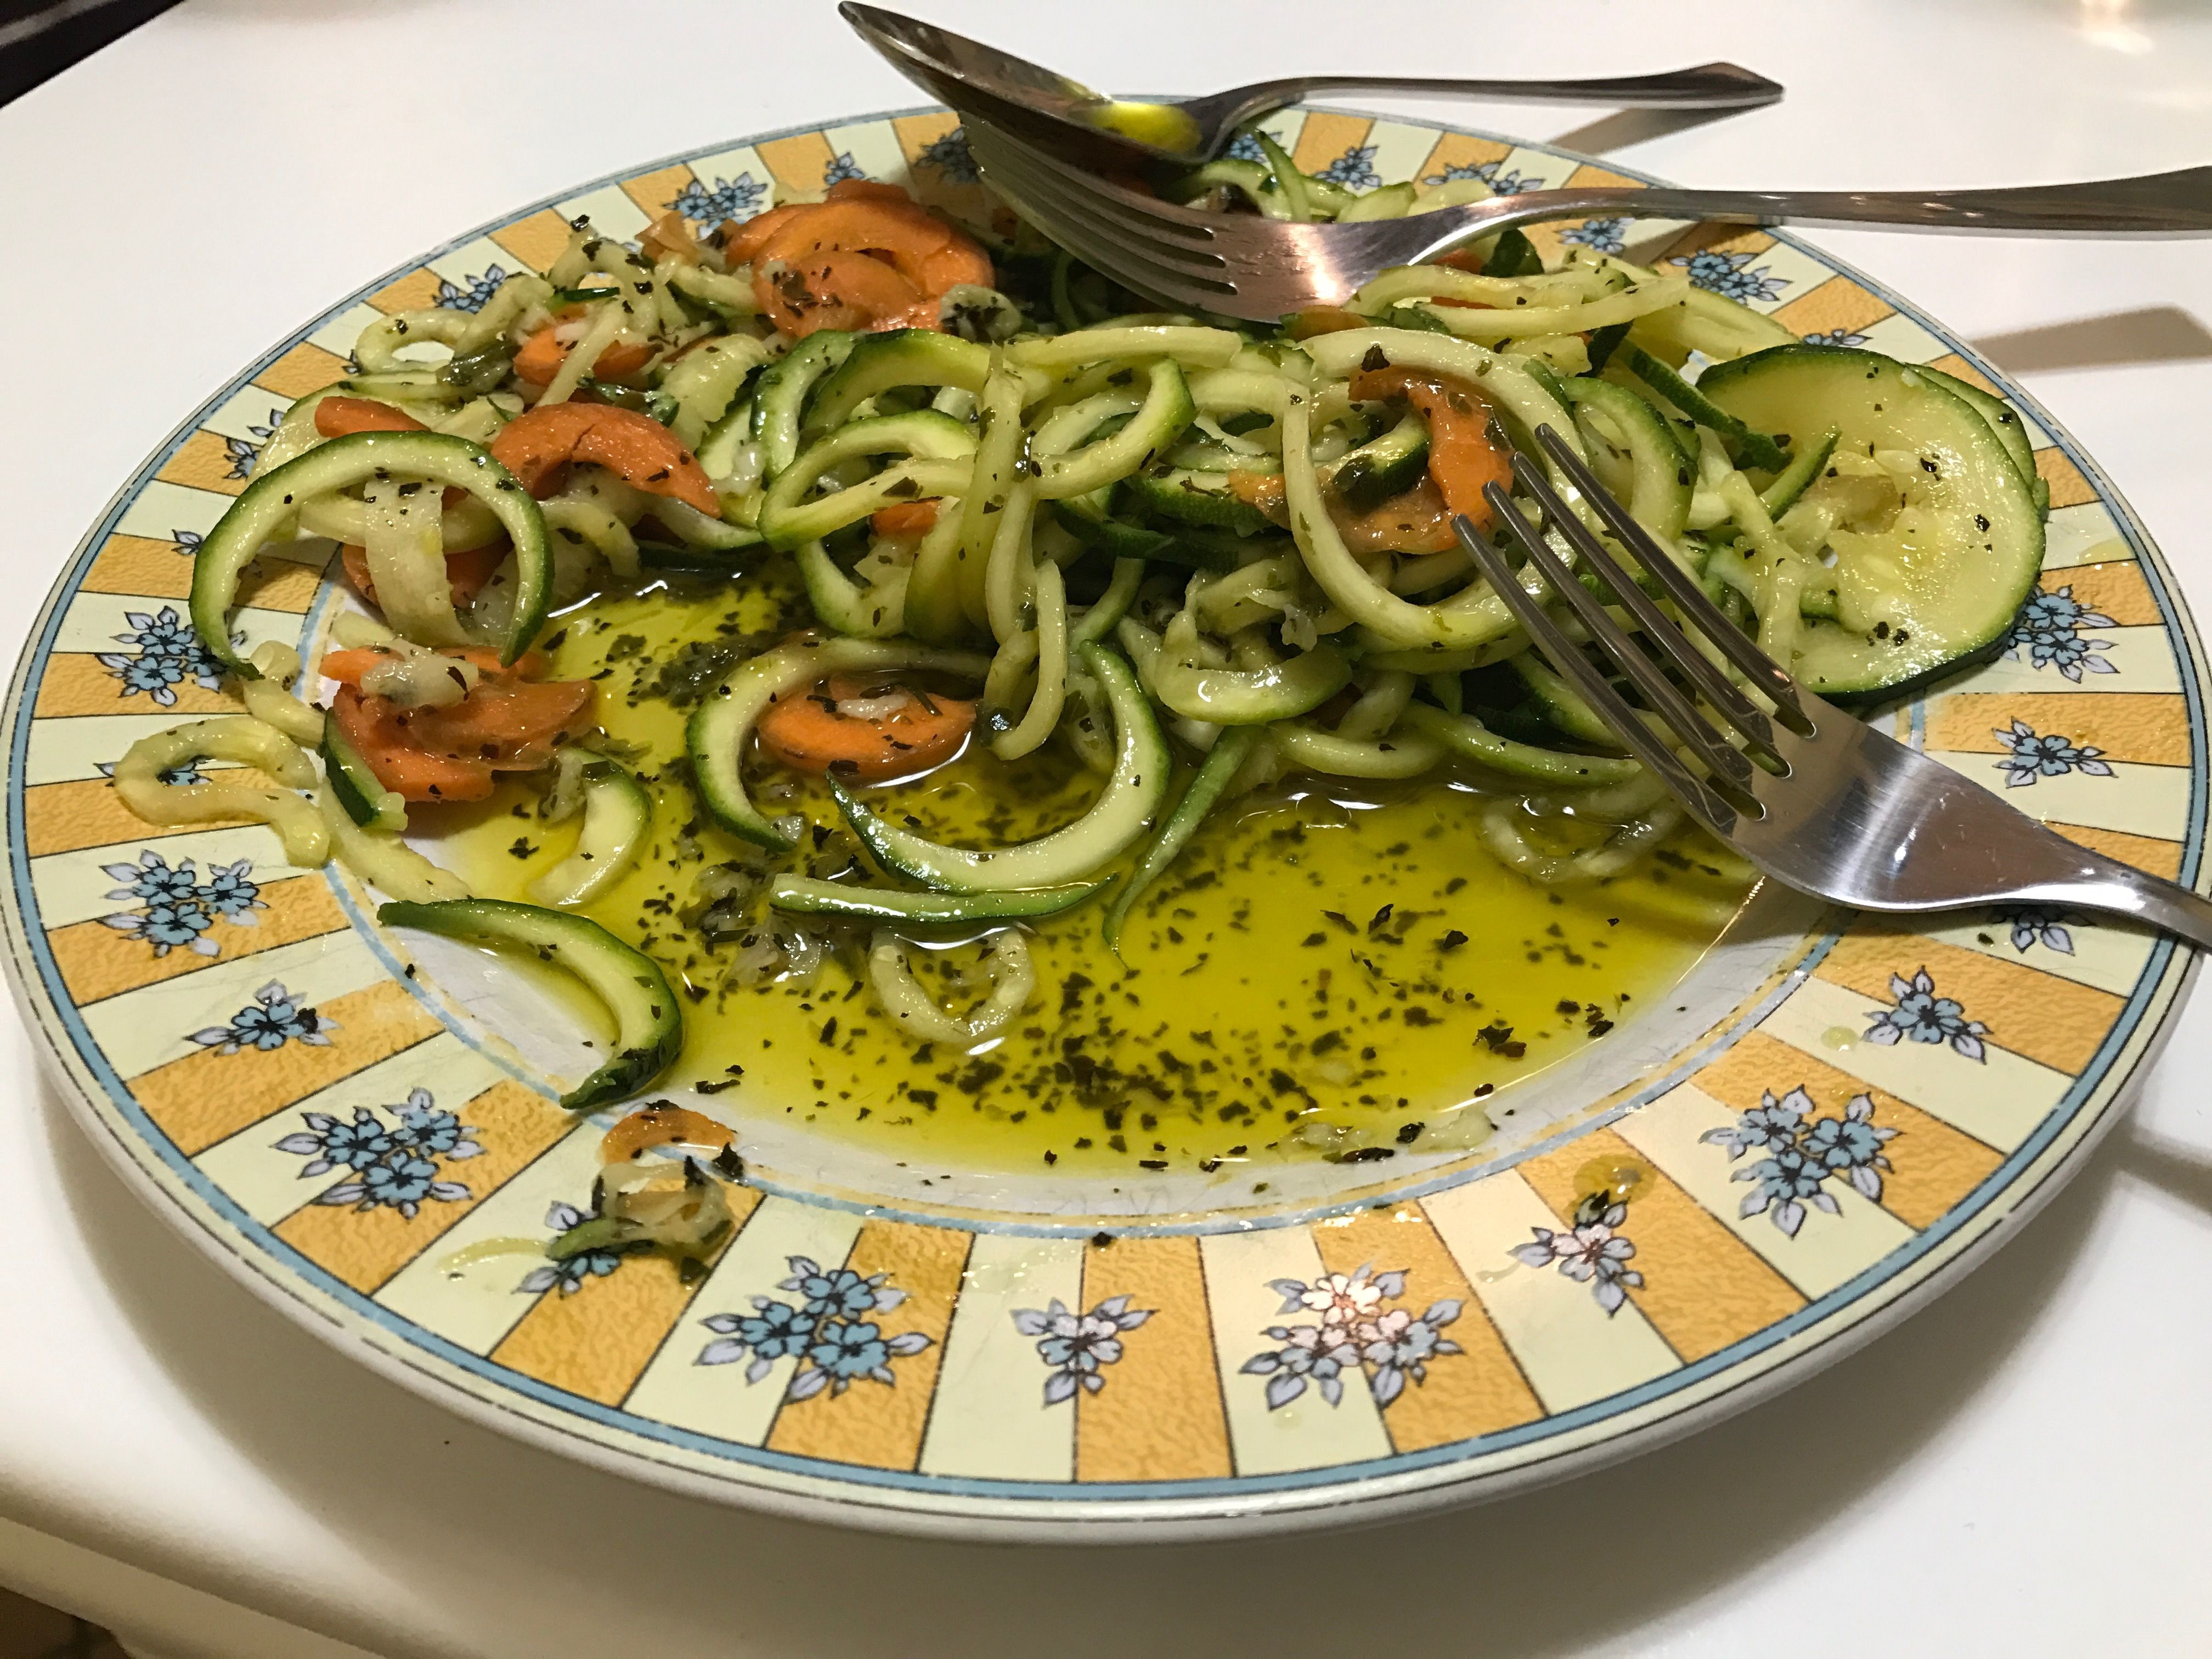 The Veggetti Spiralizes Vegetables into Spaghetti